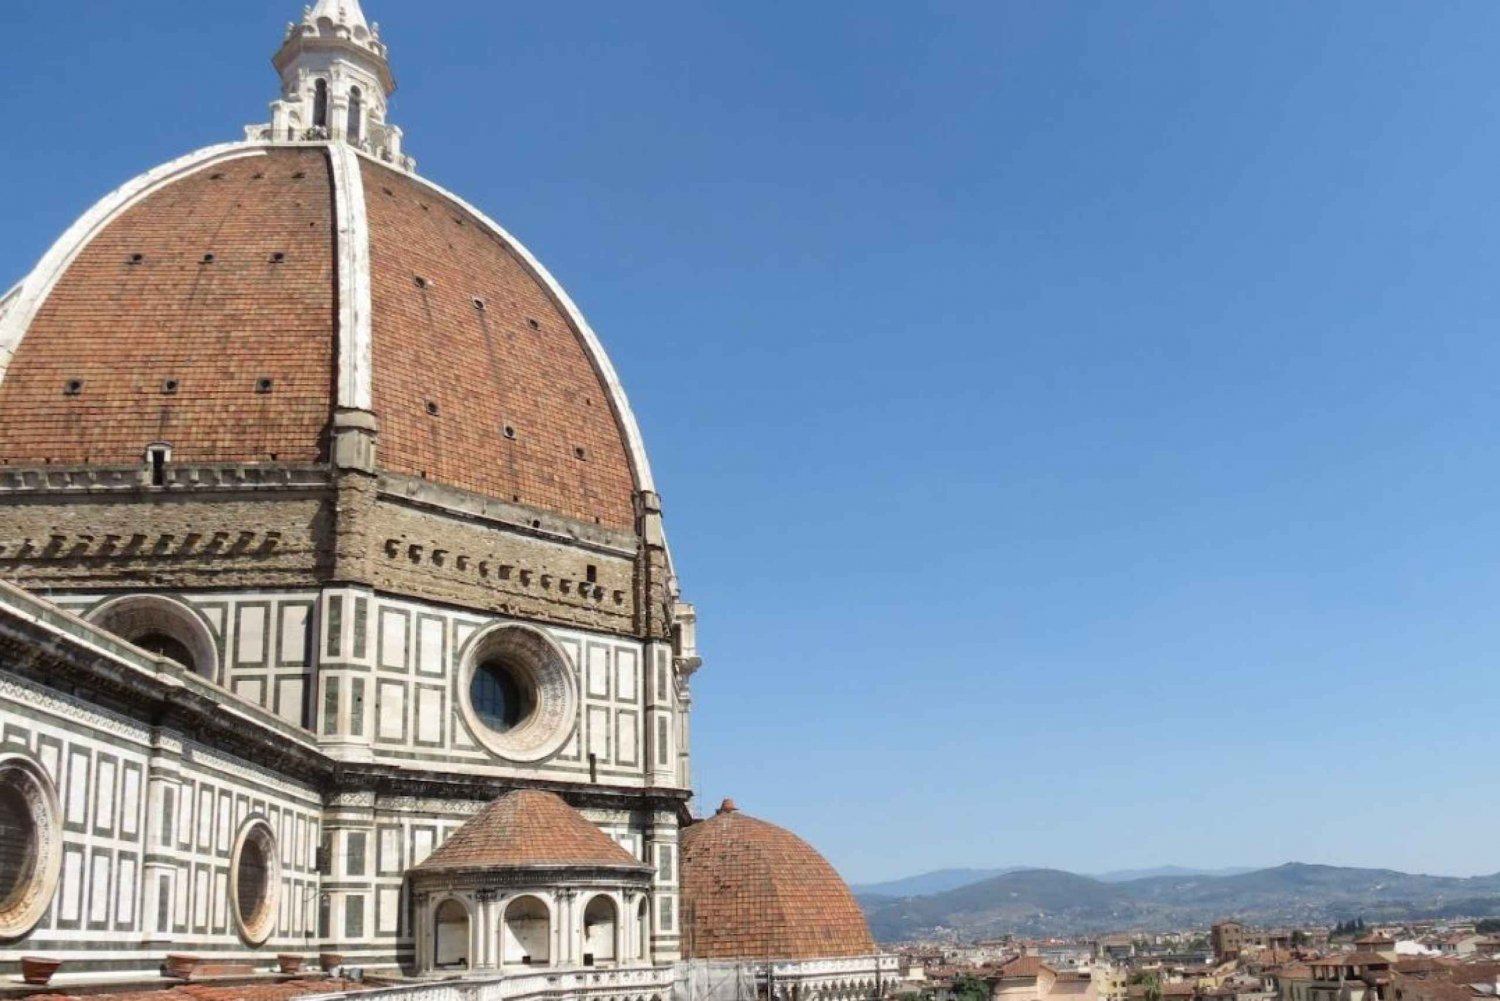 Adgangsbilletter til Brunelleschis kuppel i Firenze